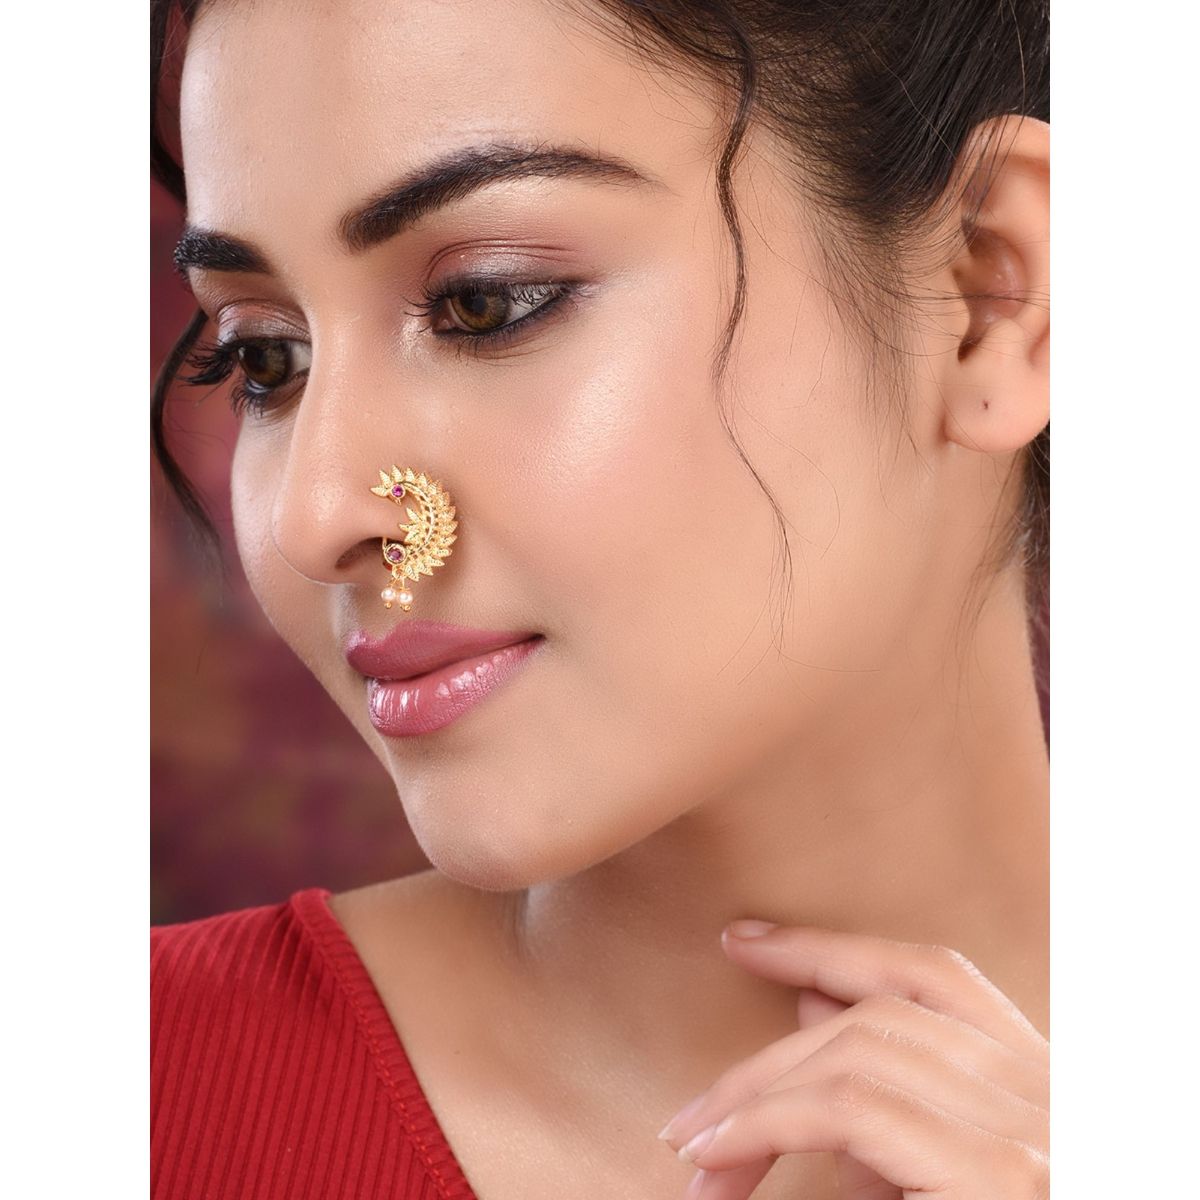 Buy Swarajshop Traditional Maharashtrian Nose Ring For Wedding Online -  Best Price Swarajshop Traditional Maharashtrian Nose Ring For Wedding -  Justdial Shop Online.